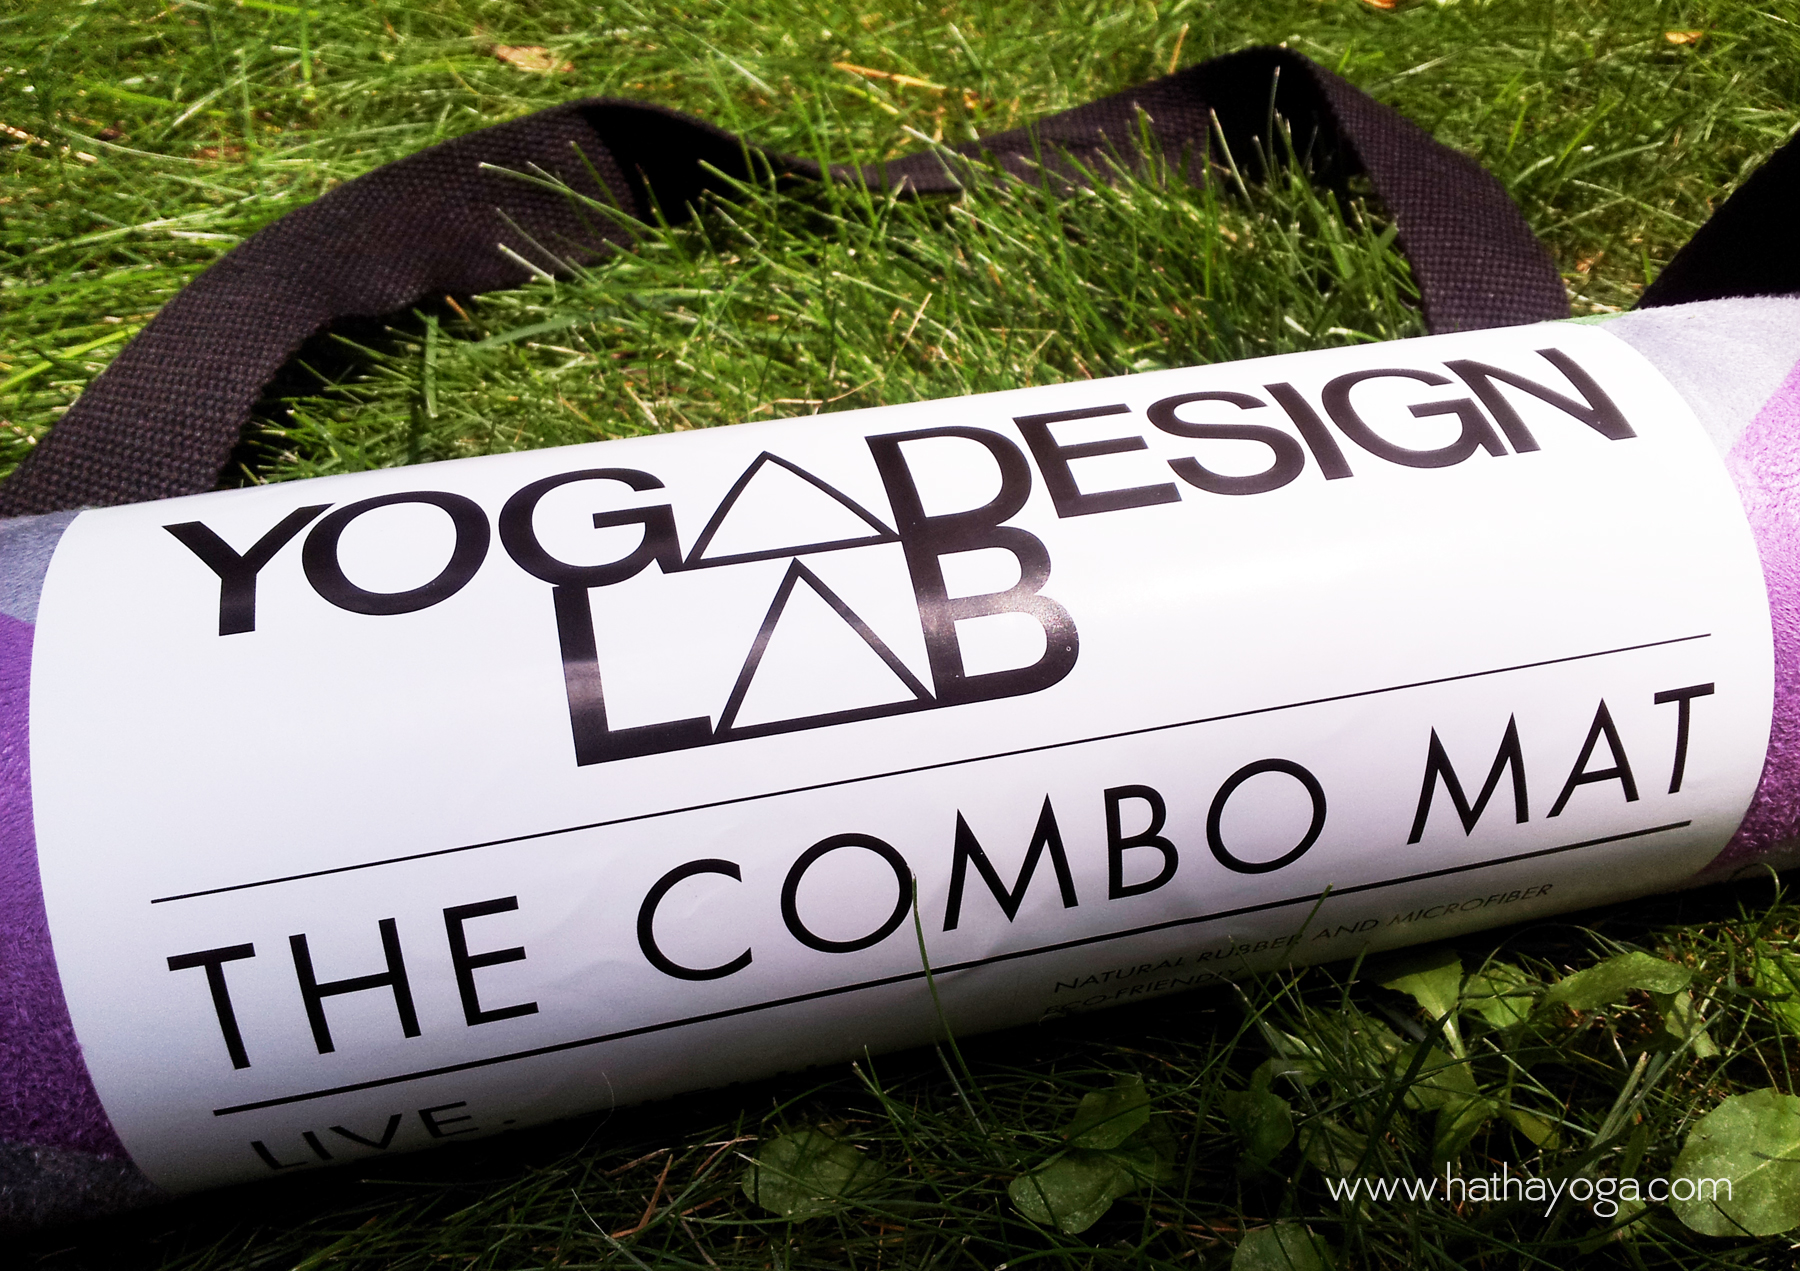 Yoga Design Lab Combo Mat review 